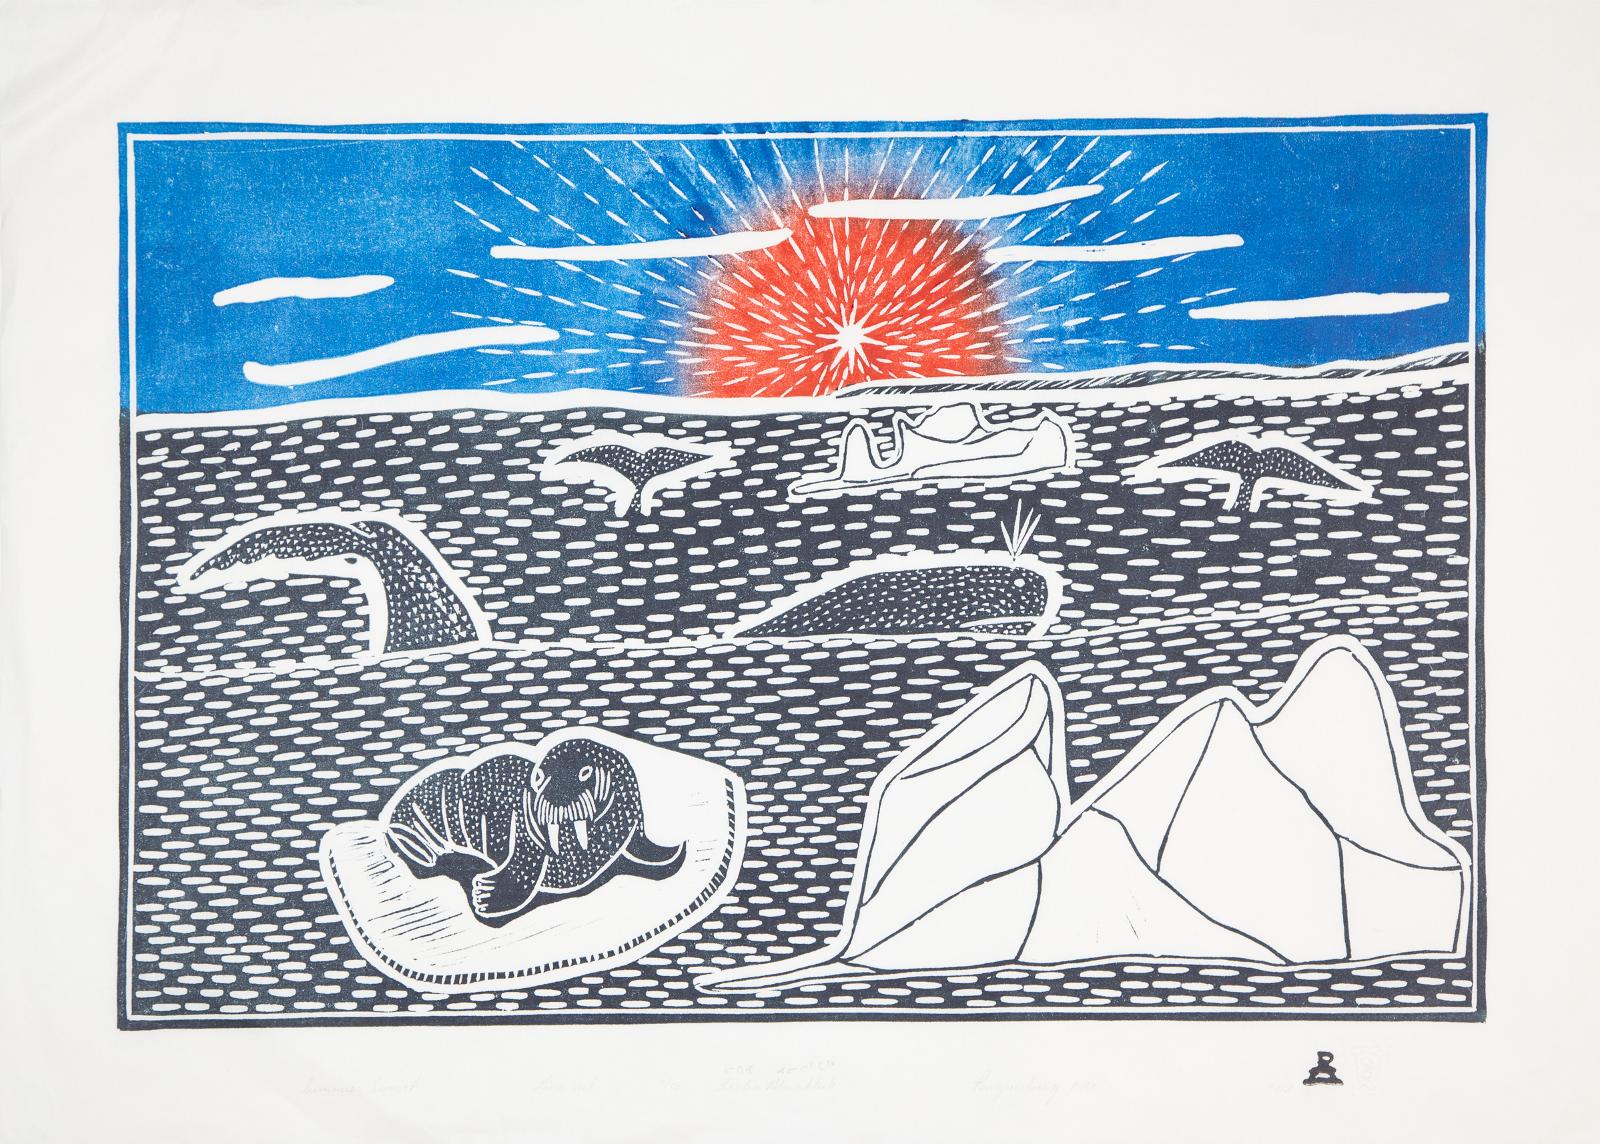 Jacoposie Tiglilk (1952) - Coasting, Summer Sunset